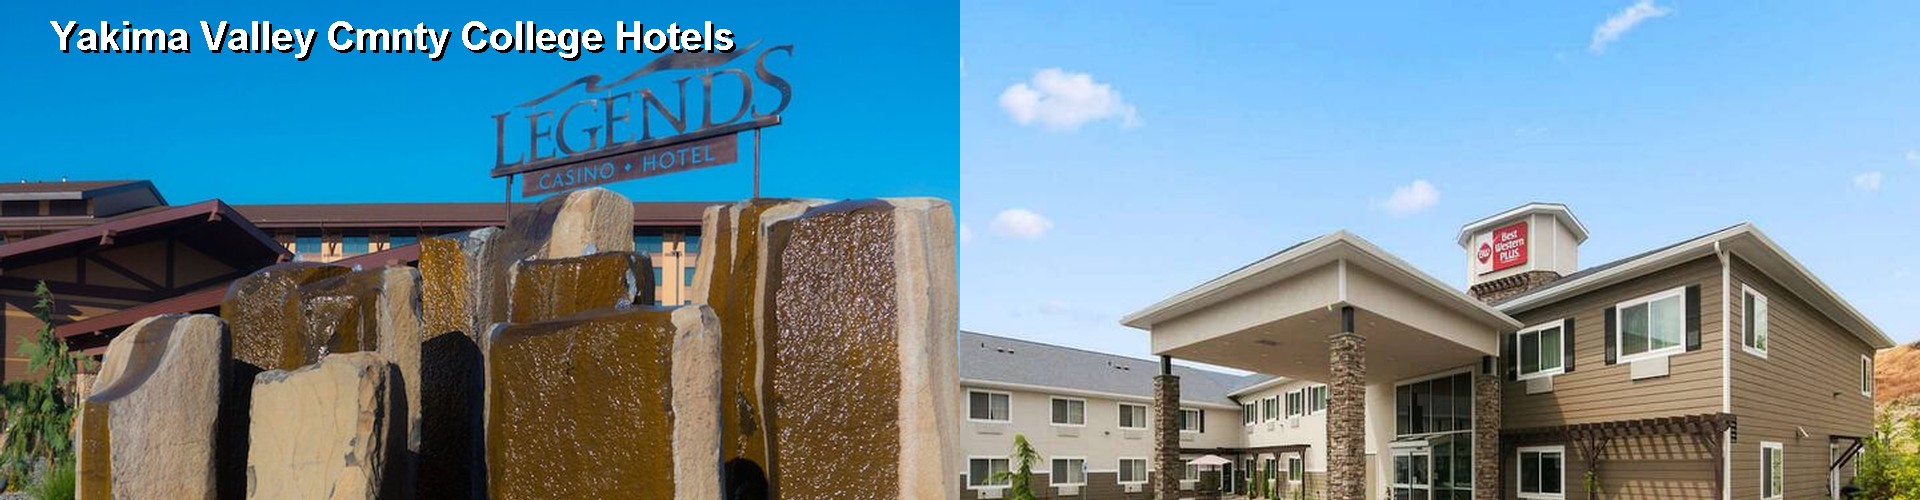 5 Best Hotels near Yakima Valley Cmnty College